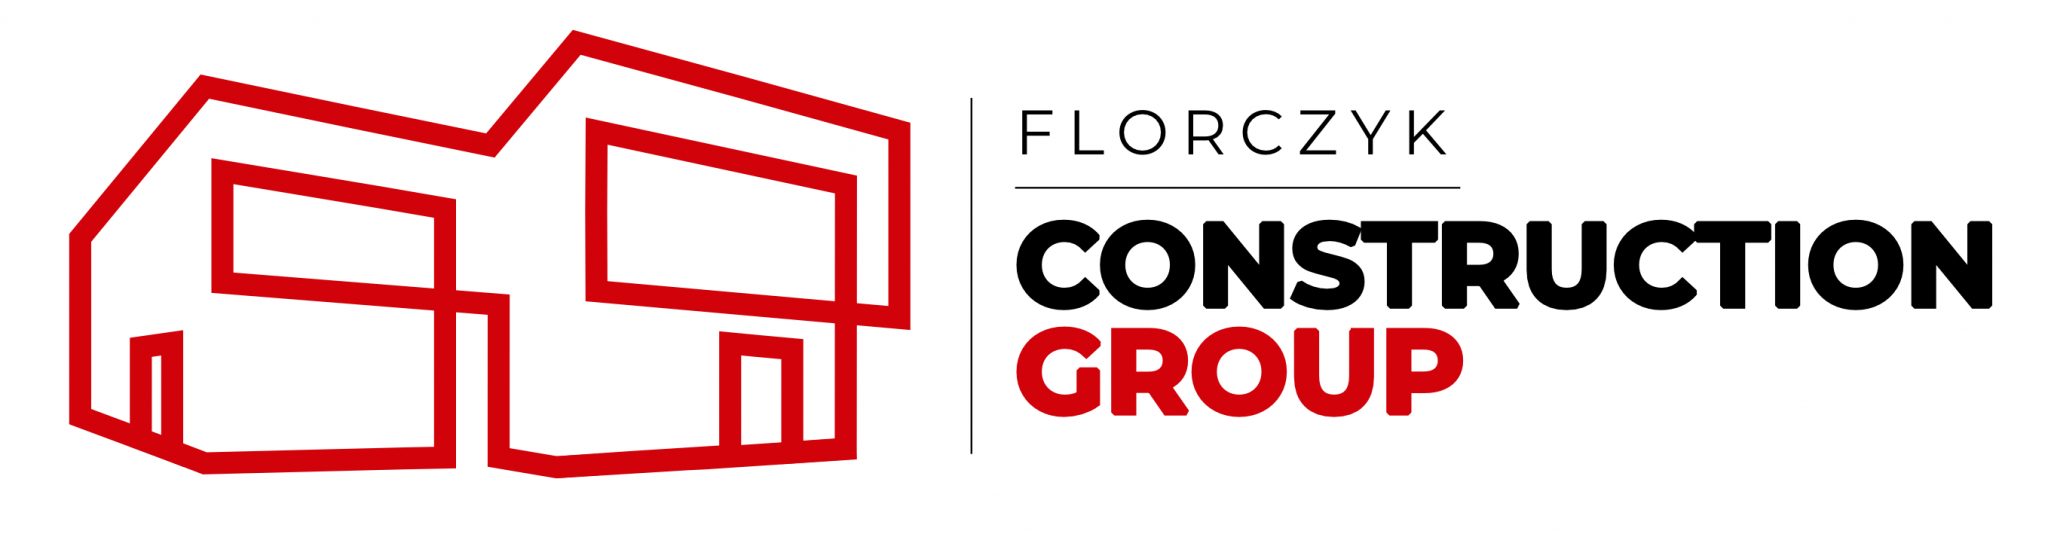 Construction group logo